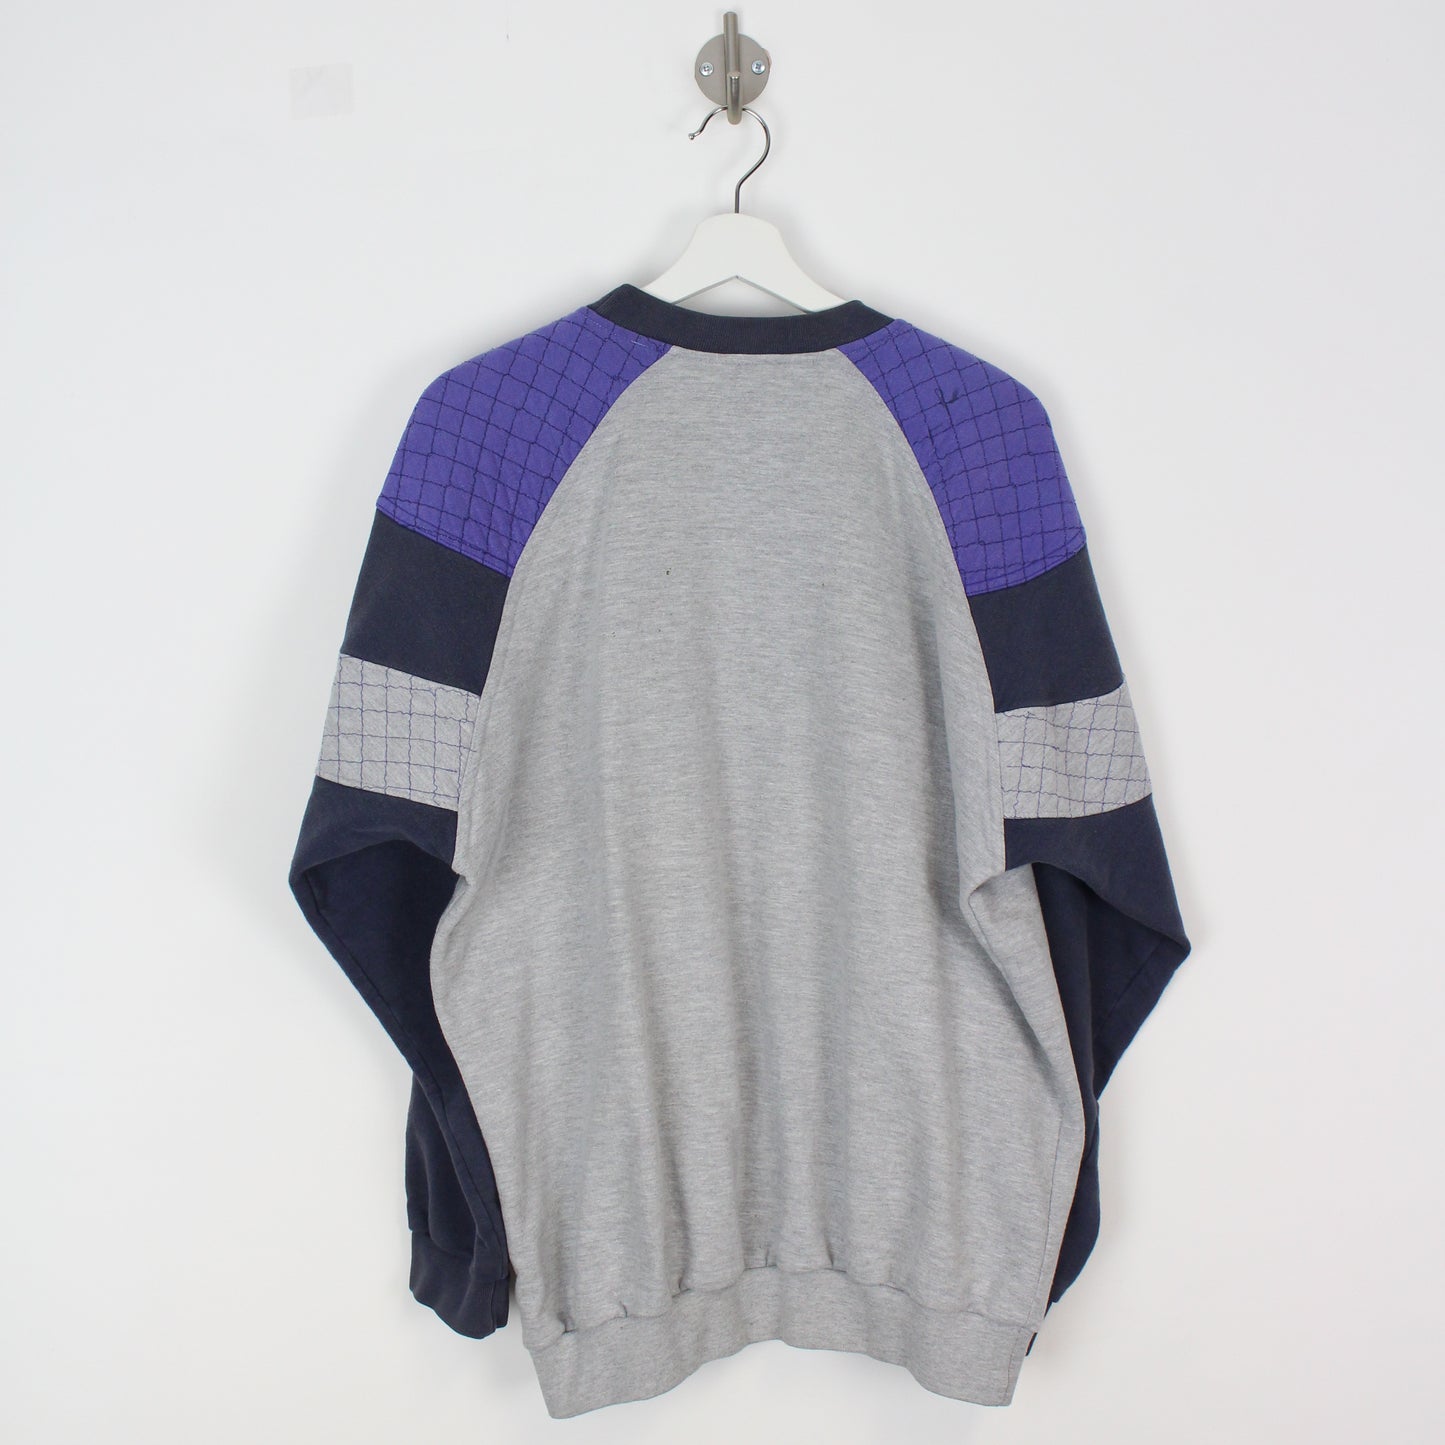 90s Puma Grey Embroidered Sweatshirt (M)